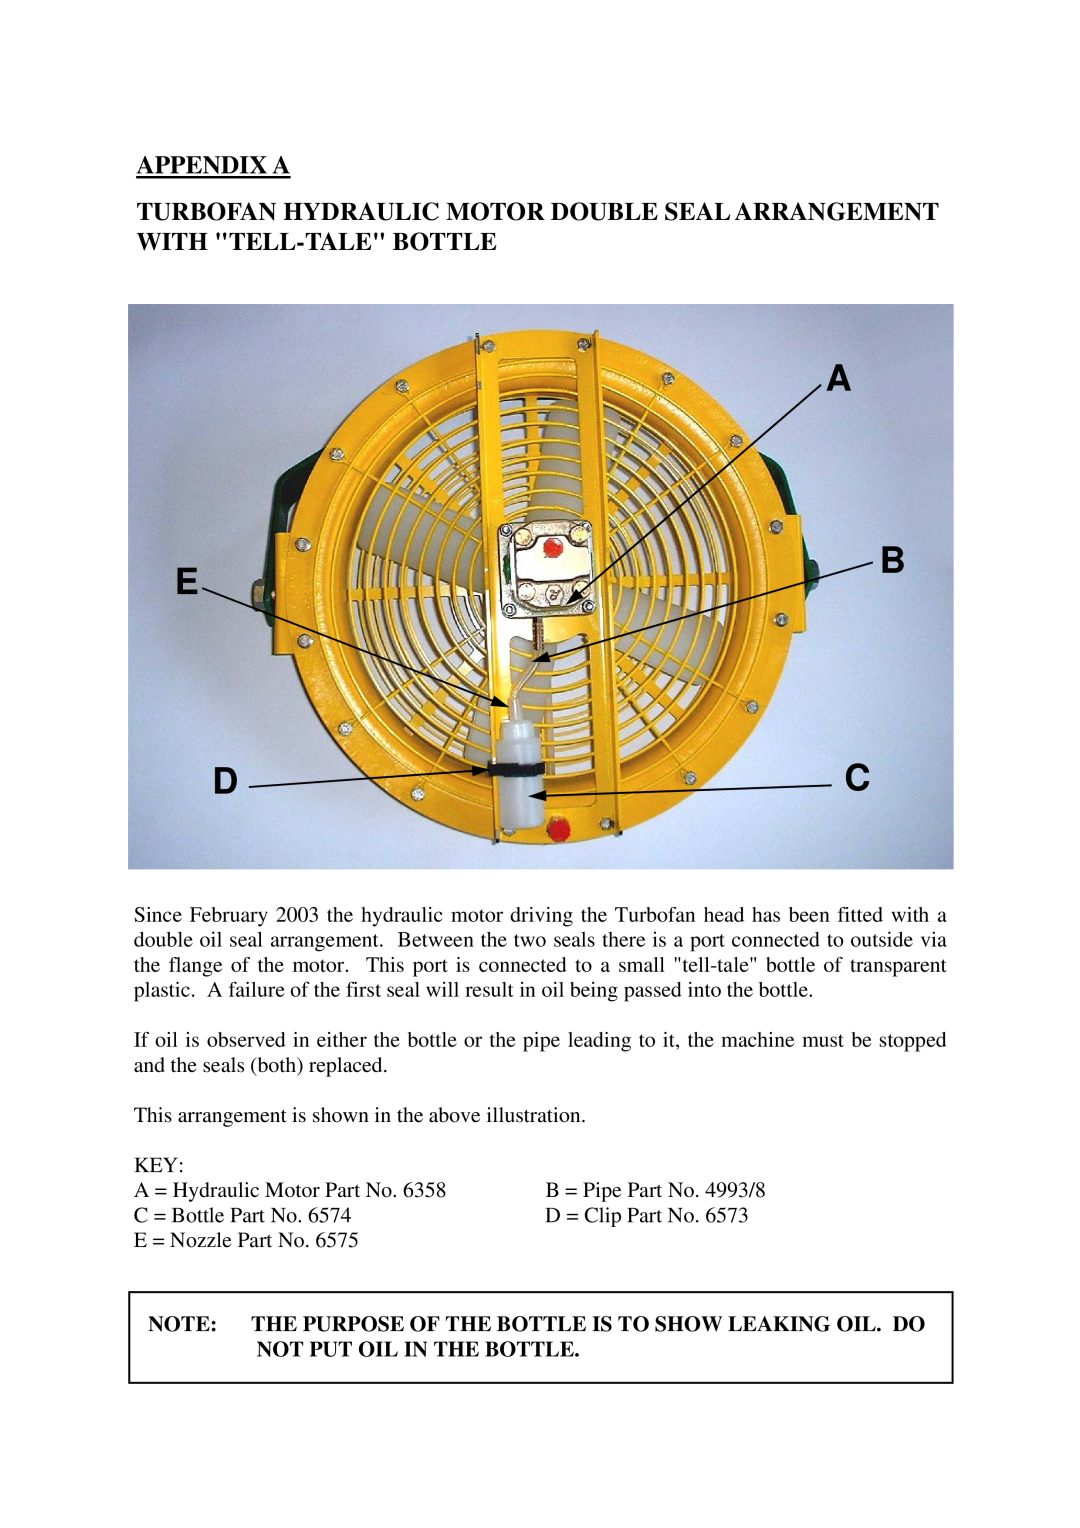 Micron Technology Turbofan instruction manual A E B D C, Appendix A 